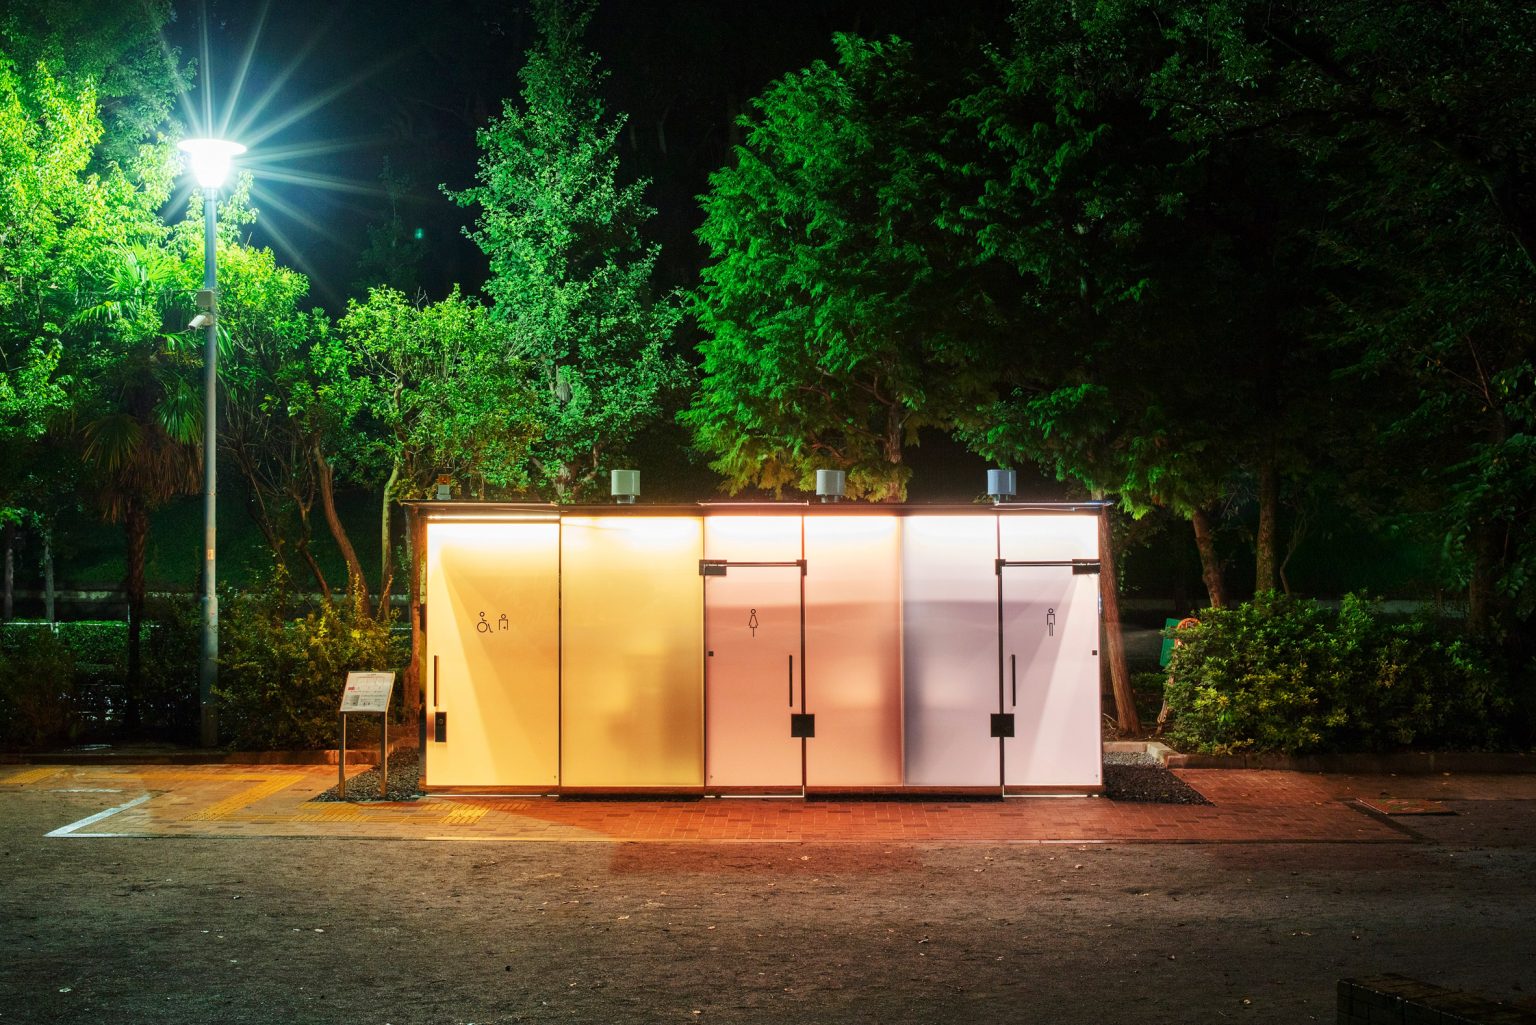 The genius behind Japan’s New transparent public toilets